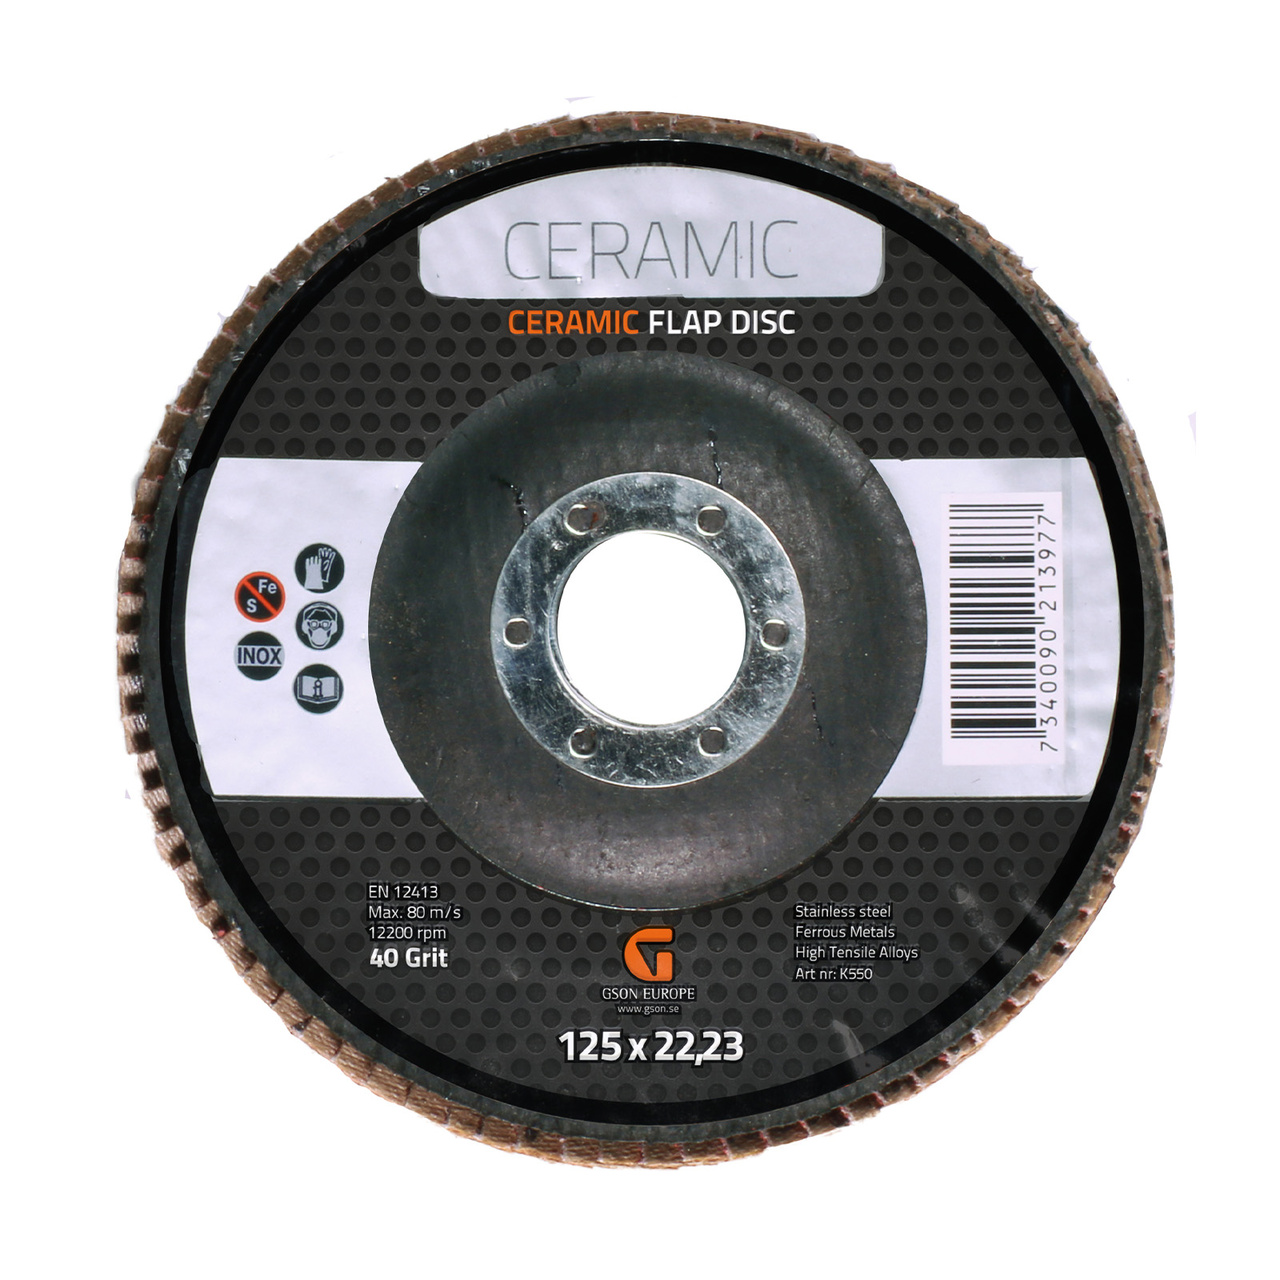 Ceramic Flap Disc 125x22,23 mm